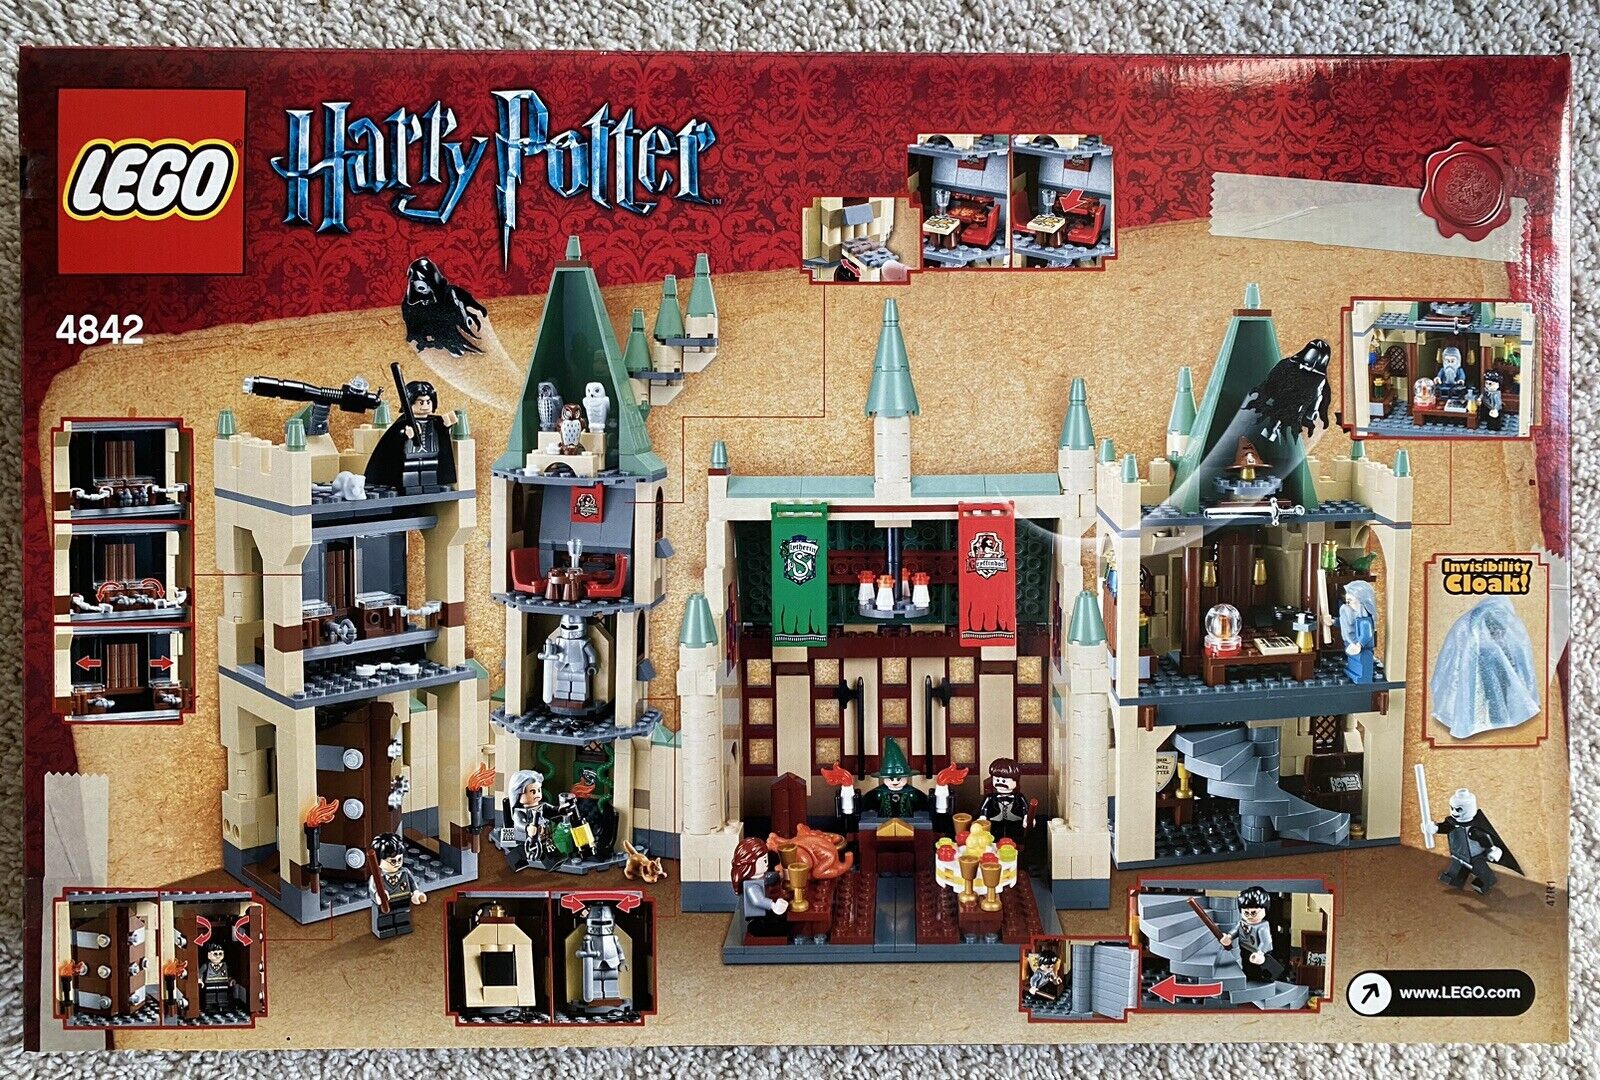 LEGO Harry Potter Hogwart's Castle 4842 (Discontinued by manufacturer)